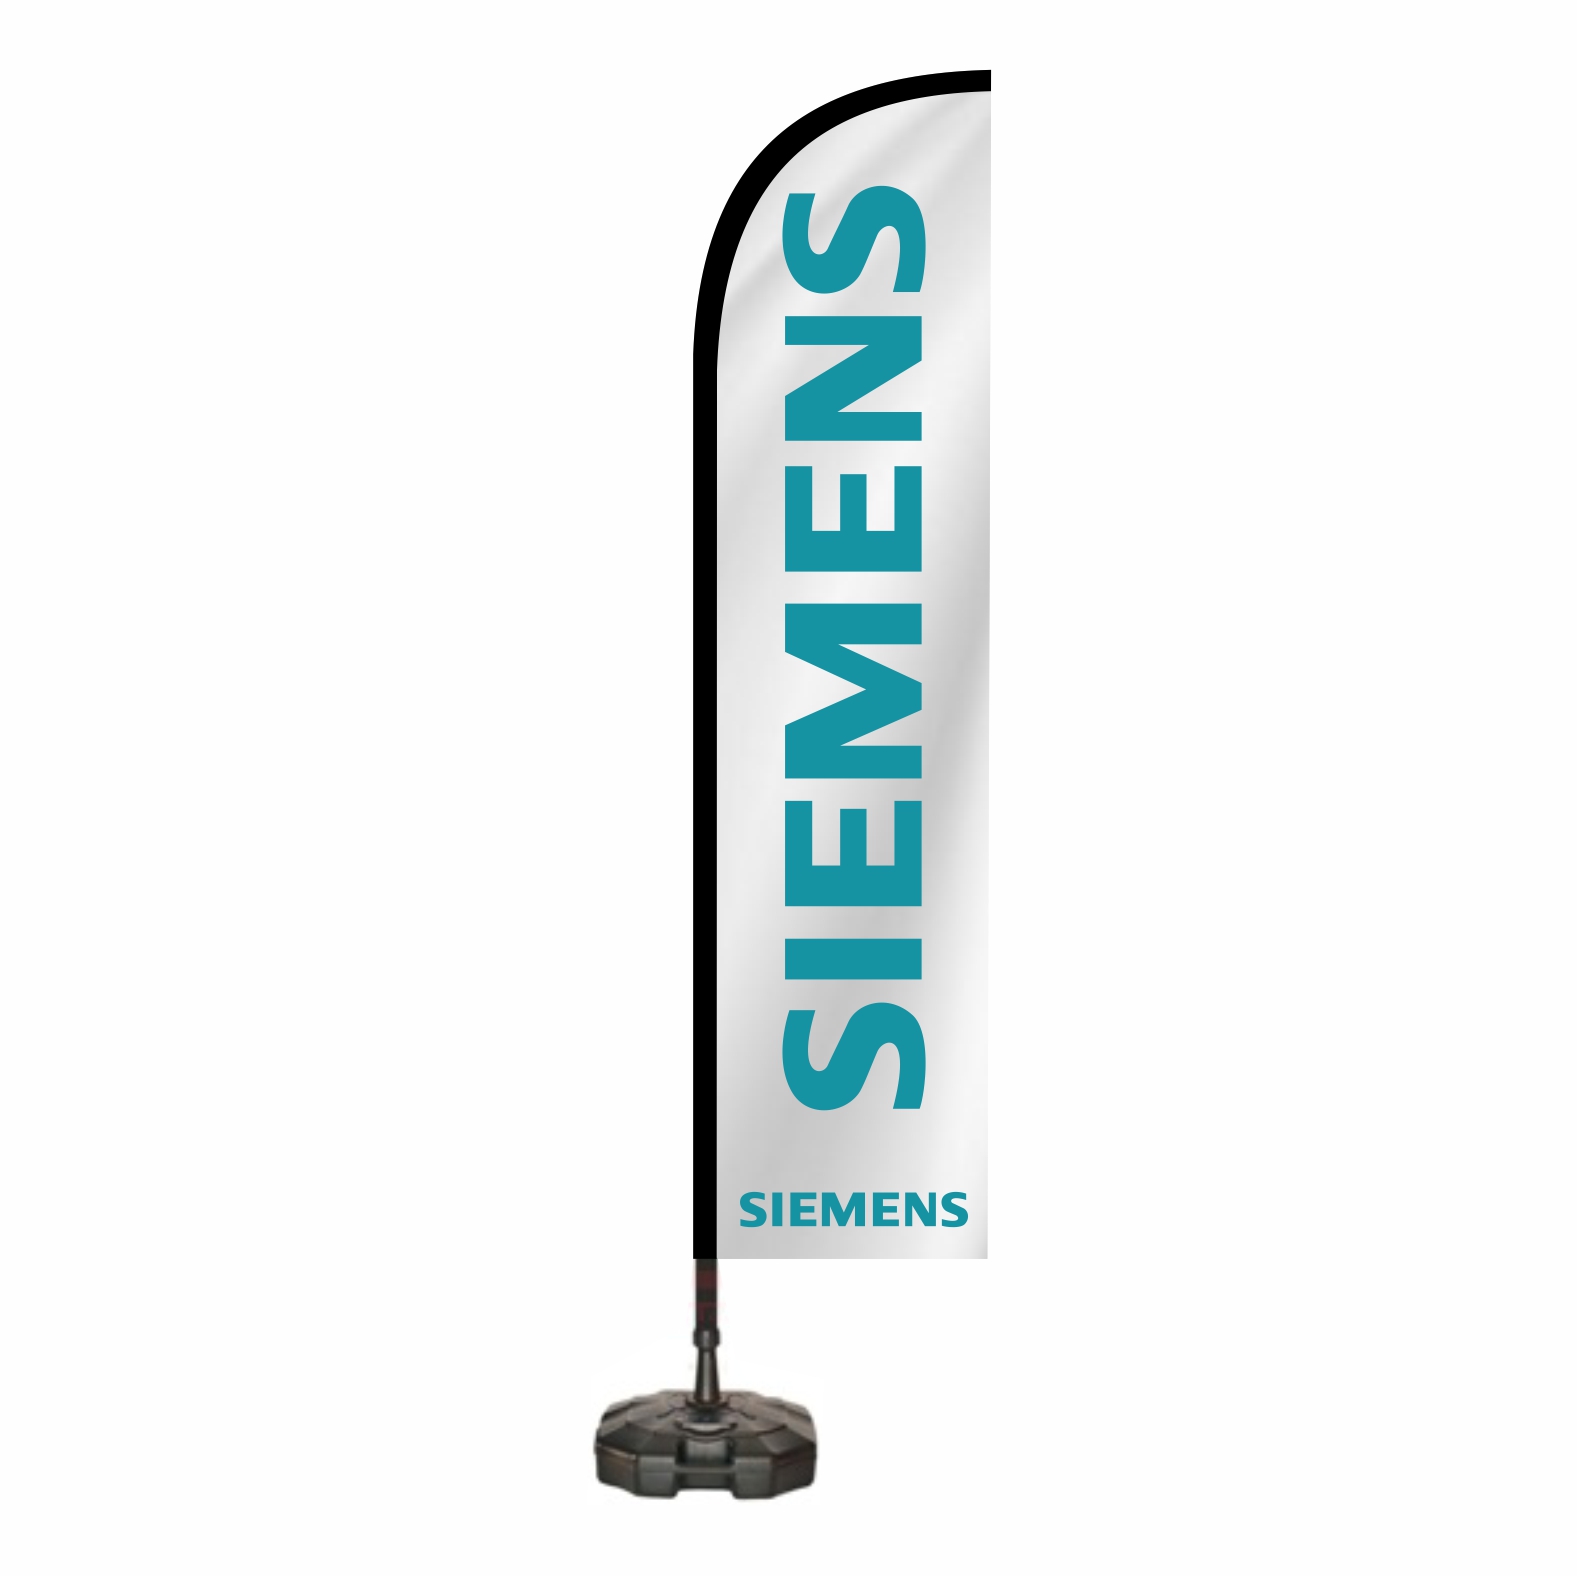 Siemens Yelken Bayra